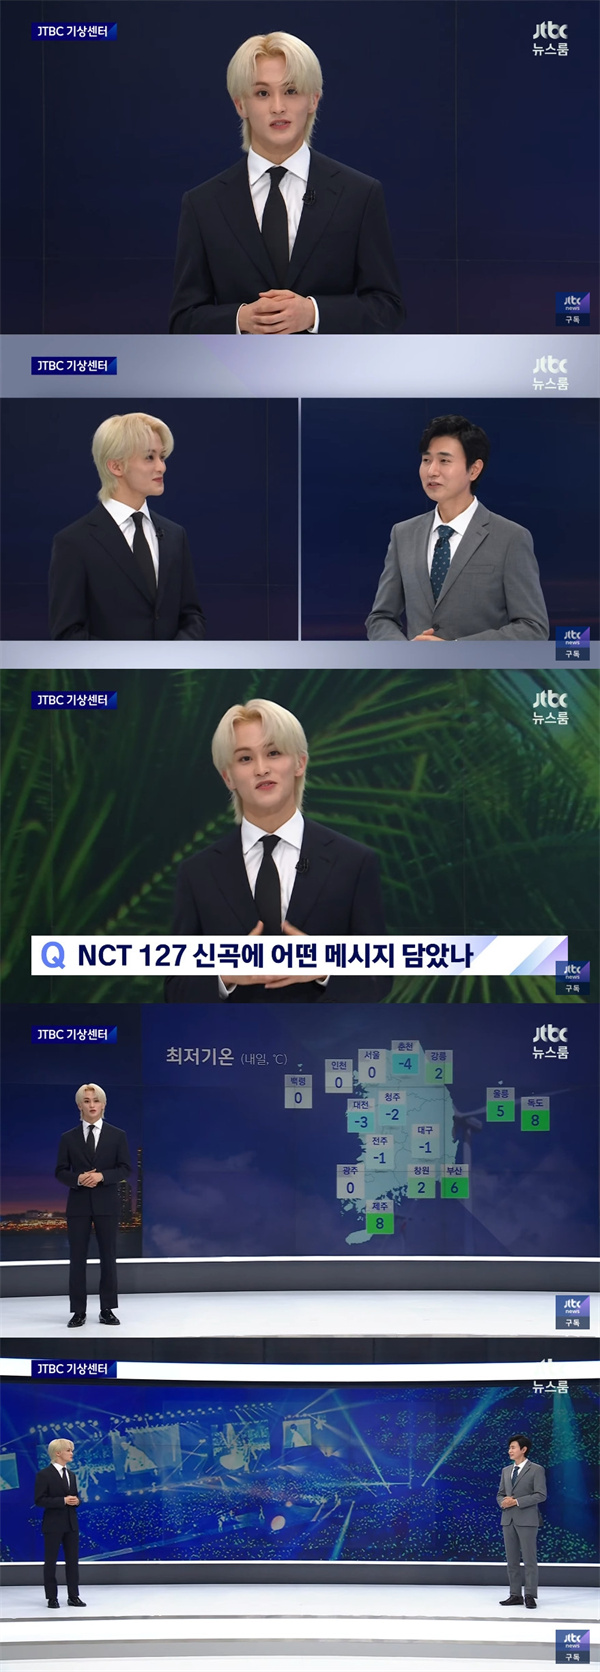 NCT成员MARK出演JTBC《NEWS ROOM》，从宣传新曲《Ay-Yo》到成功变身为天气预报精